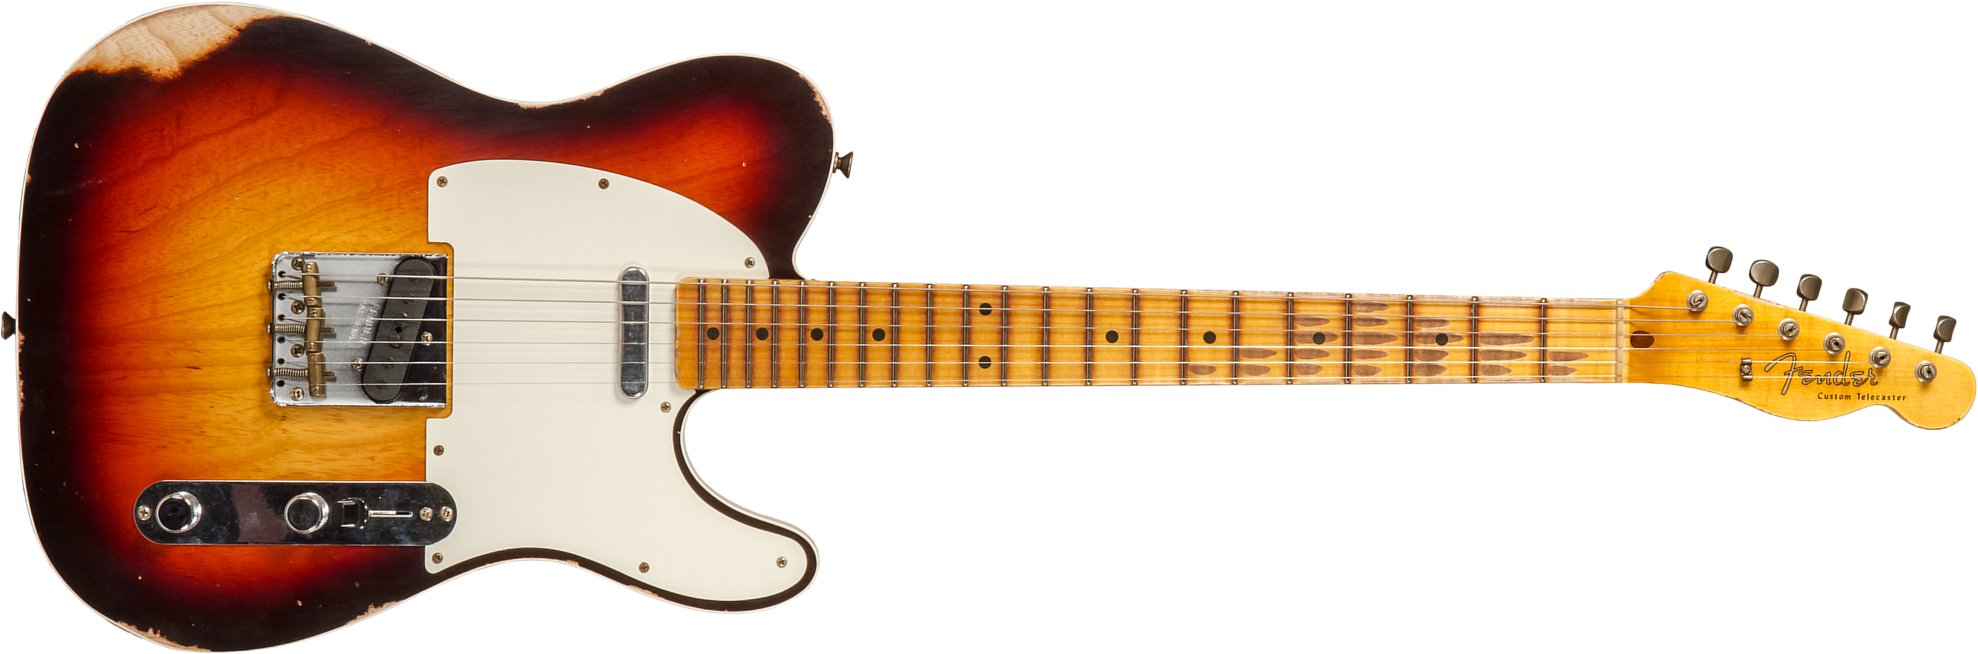 Fender Custom Shop Tele Custom 1959 2s Ht Mn #cz573750 - Relic Chocolate 3-color Sunburst - Tel shape electric guitar - Main picture